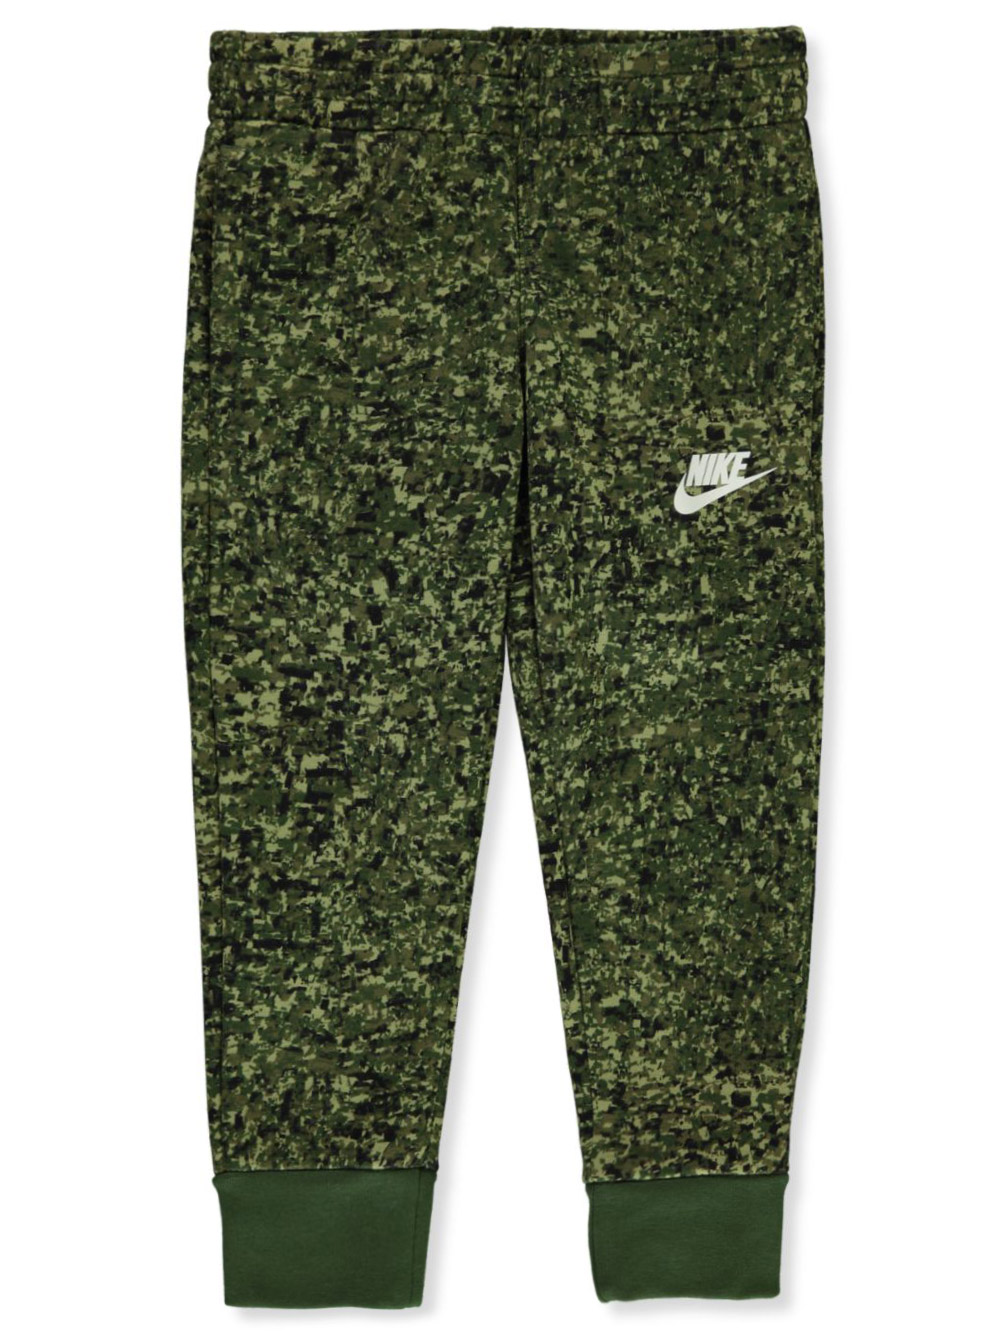 Green Sweatpants/Joggers